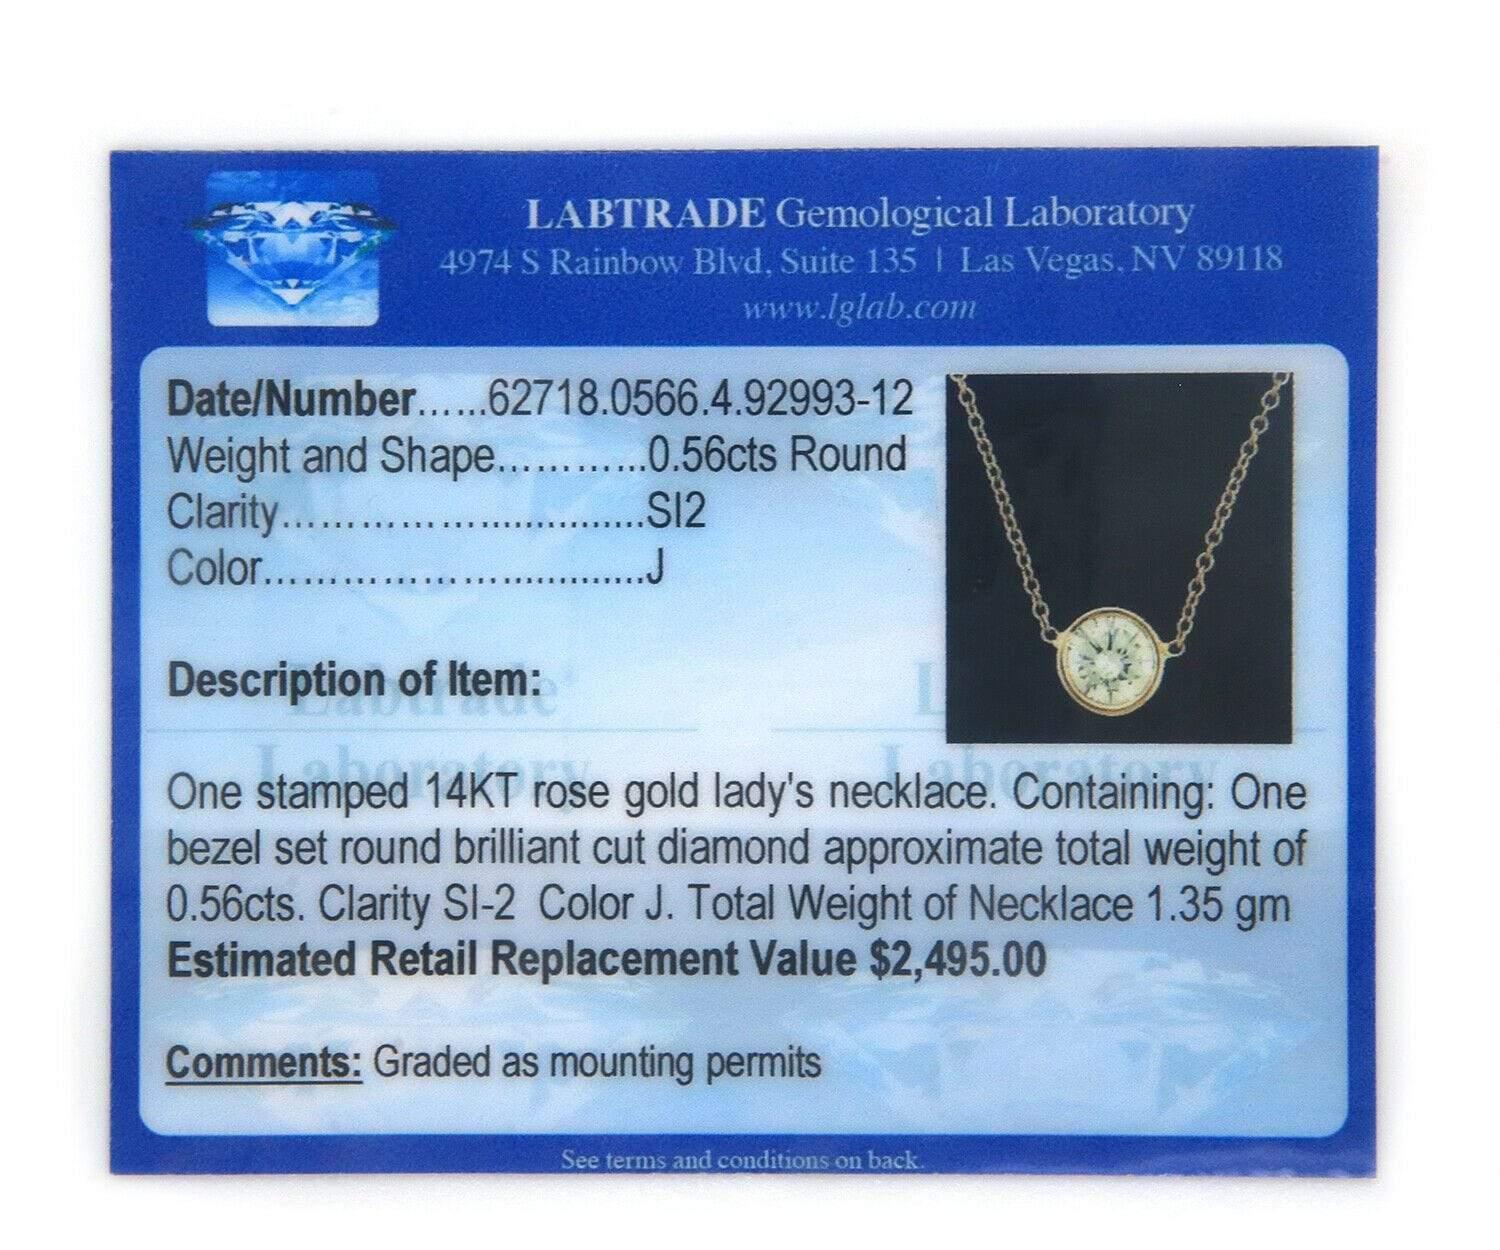 0.56ctw Diamond Solitaire Pendant Necklace 14K Rose Gold W/ Cert

Diamond Solitaire Pendant Necklace
14K Rose Gold
Diamond Weight (Approx.): 0.56ct
Diamond Clarity: SI2
Diamond Color: J
Chain Length: 17.0 Inches
Pendant Size: 0.6mm x 0.6mm
Necklace